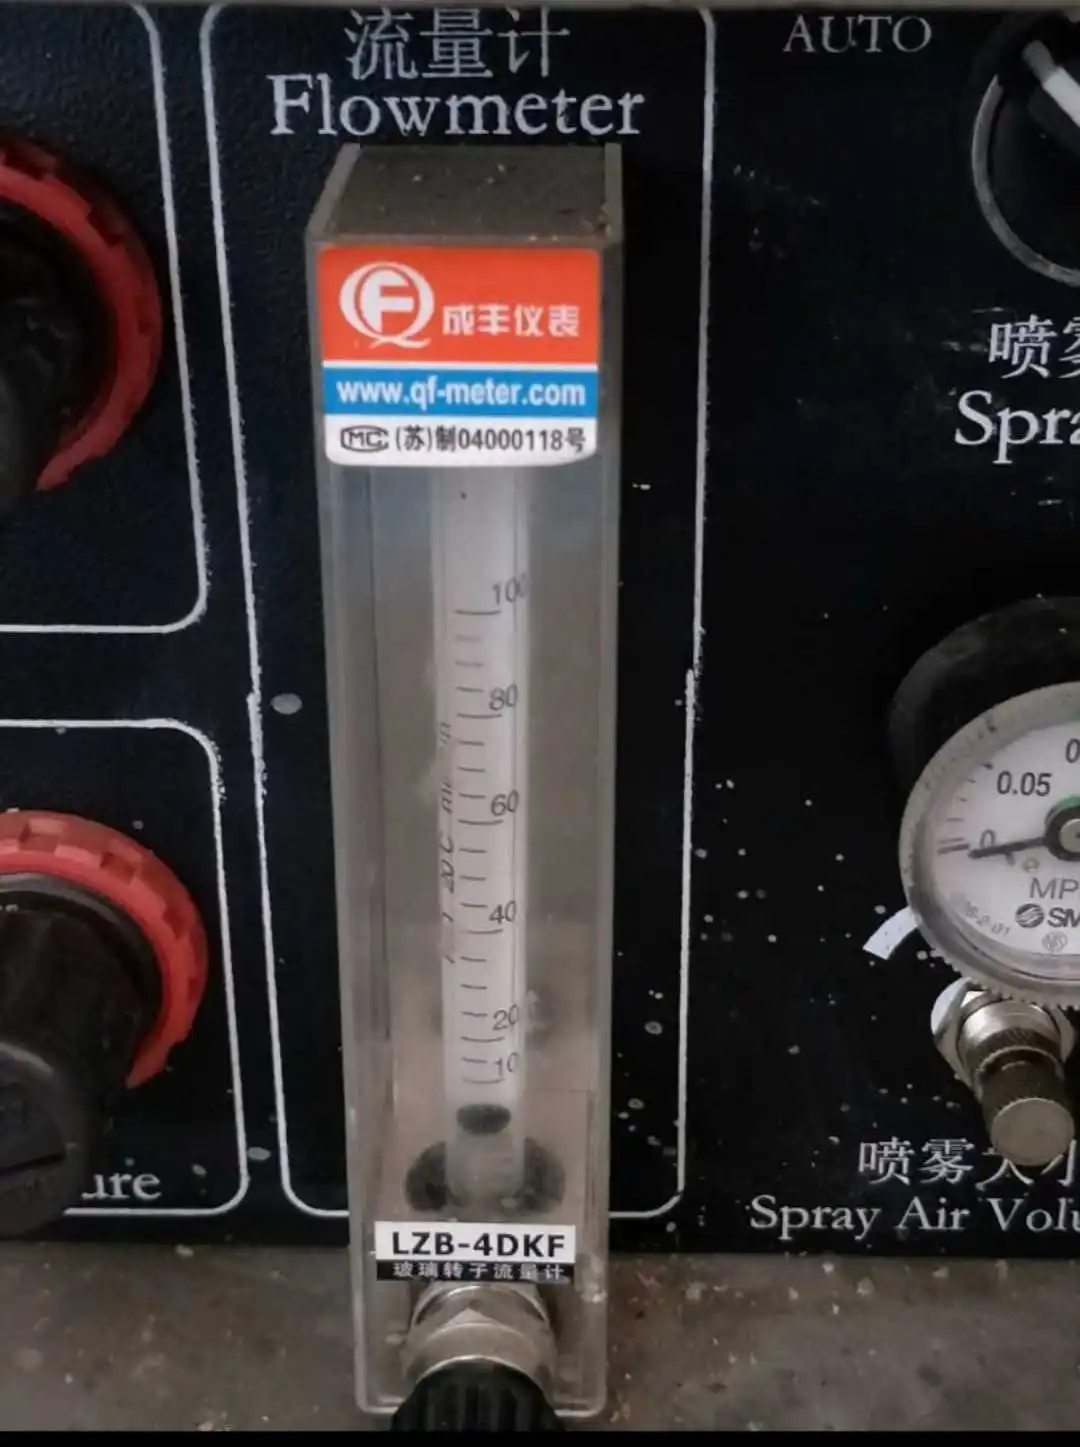 LZB-4DKF Chengfeng instrument flux glass rotor flowmeter wave soldering machine flowmeter spray flow